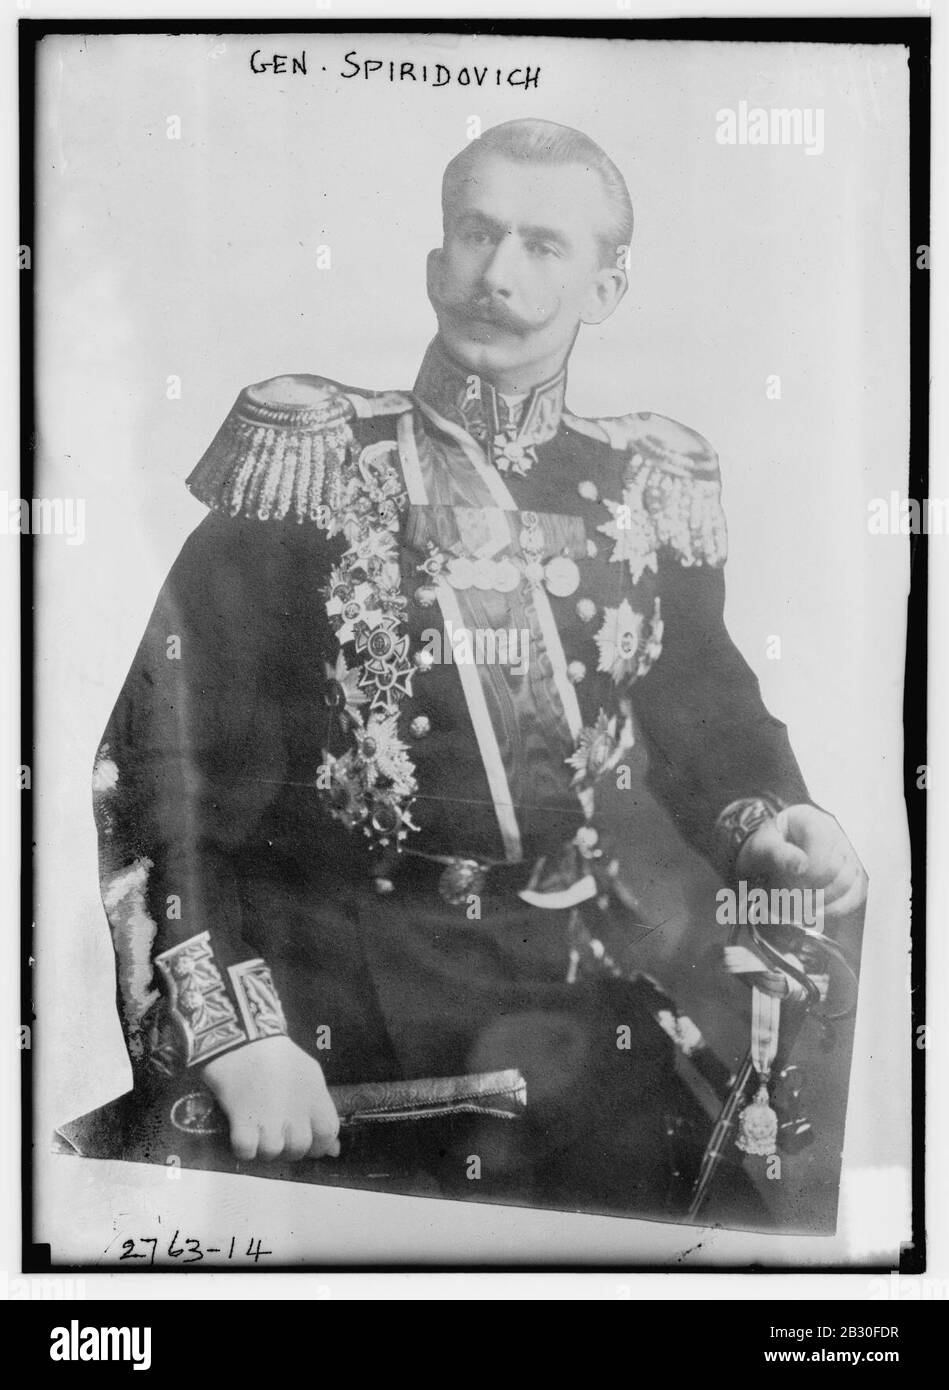 Gen. Spiridovich Foto Stock